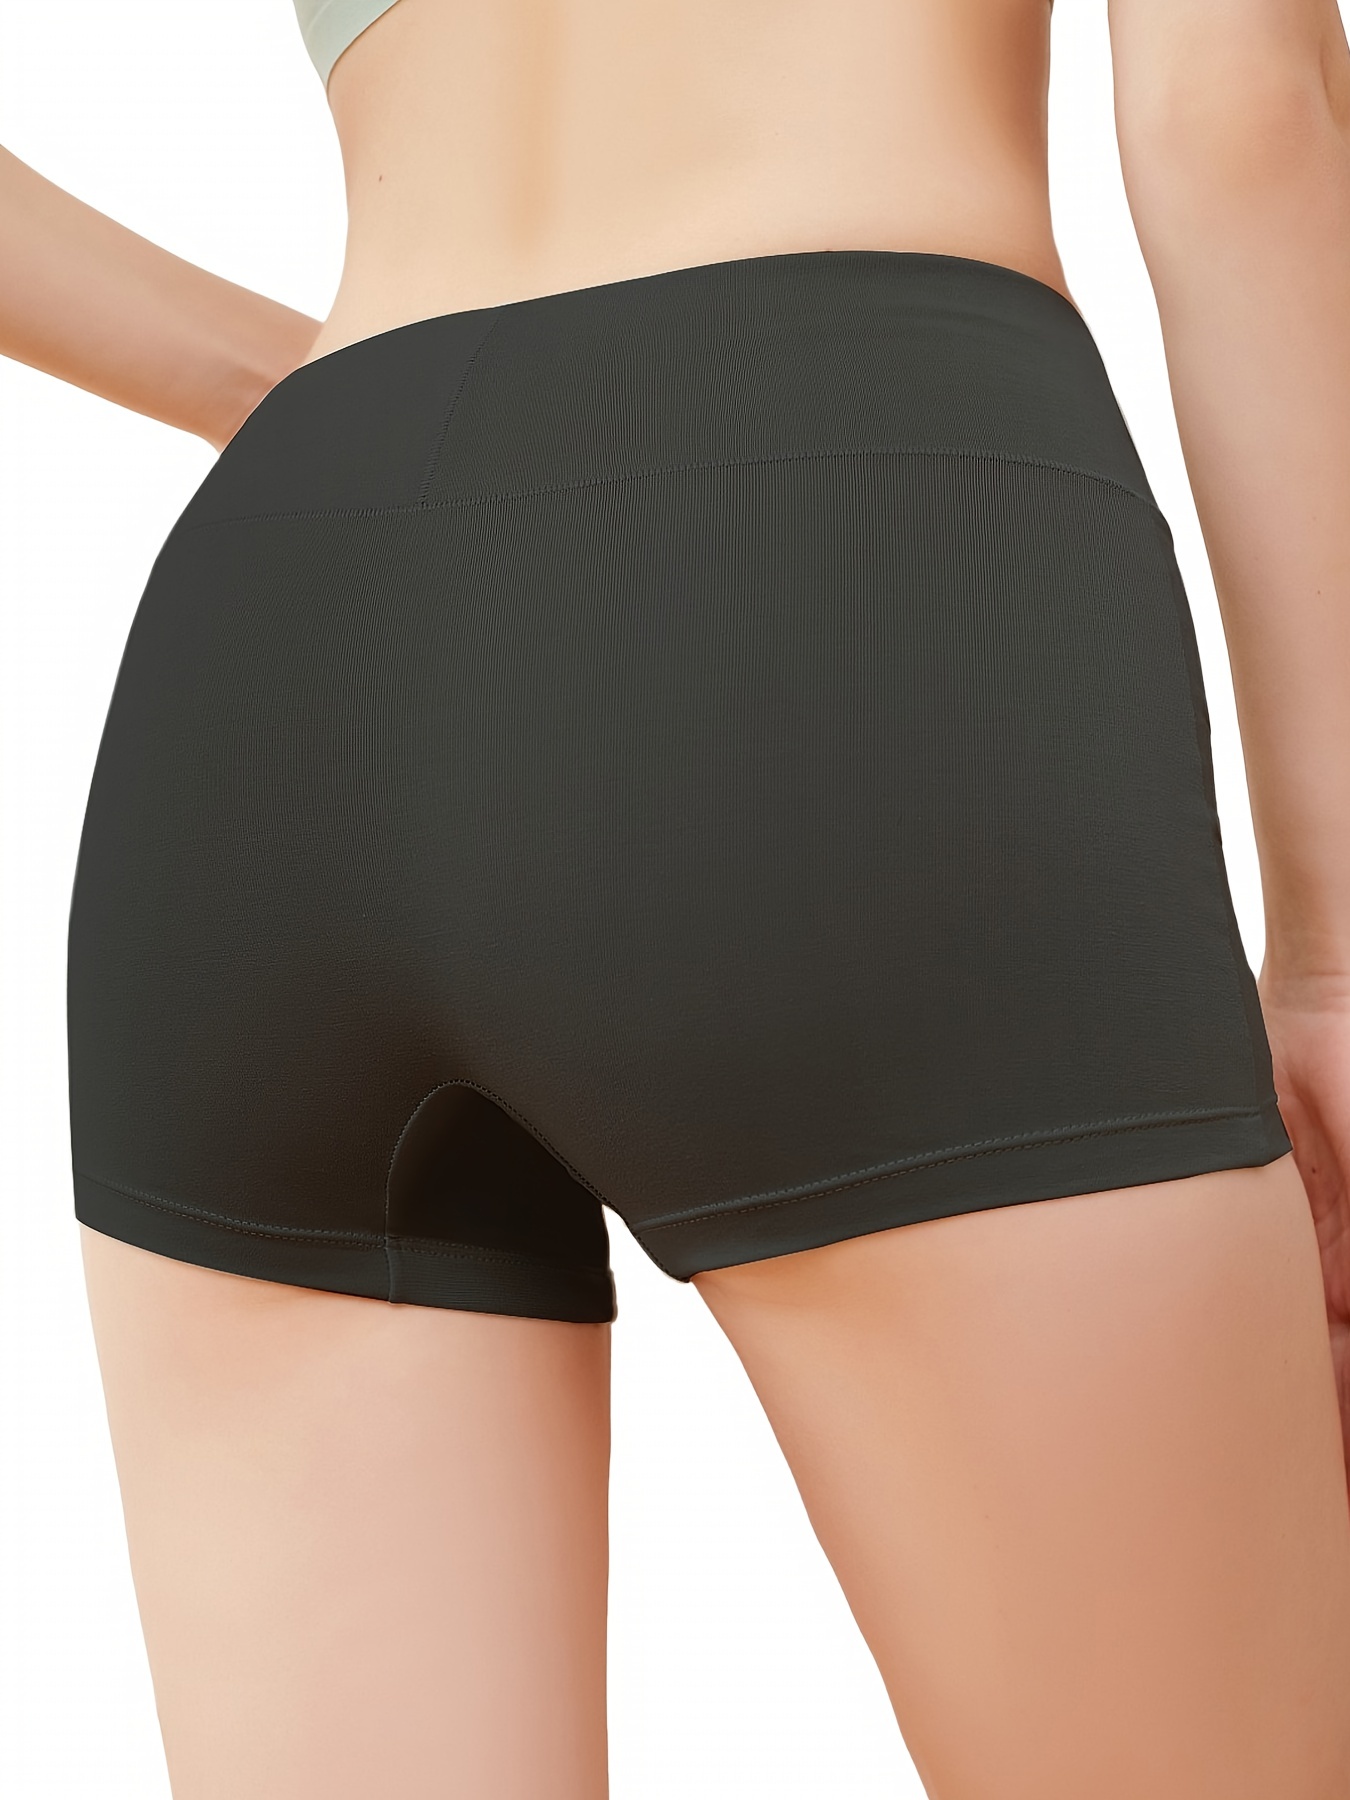 Tawop Edible Underwear for Women Women'S Traceless Briefs Medium Waist  Sports Elastic Underwear Briefs Under Outfit Bras for Women 